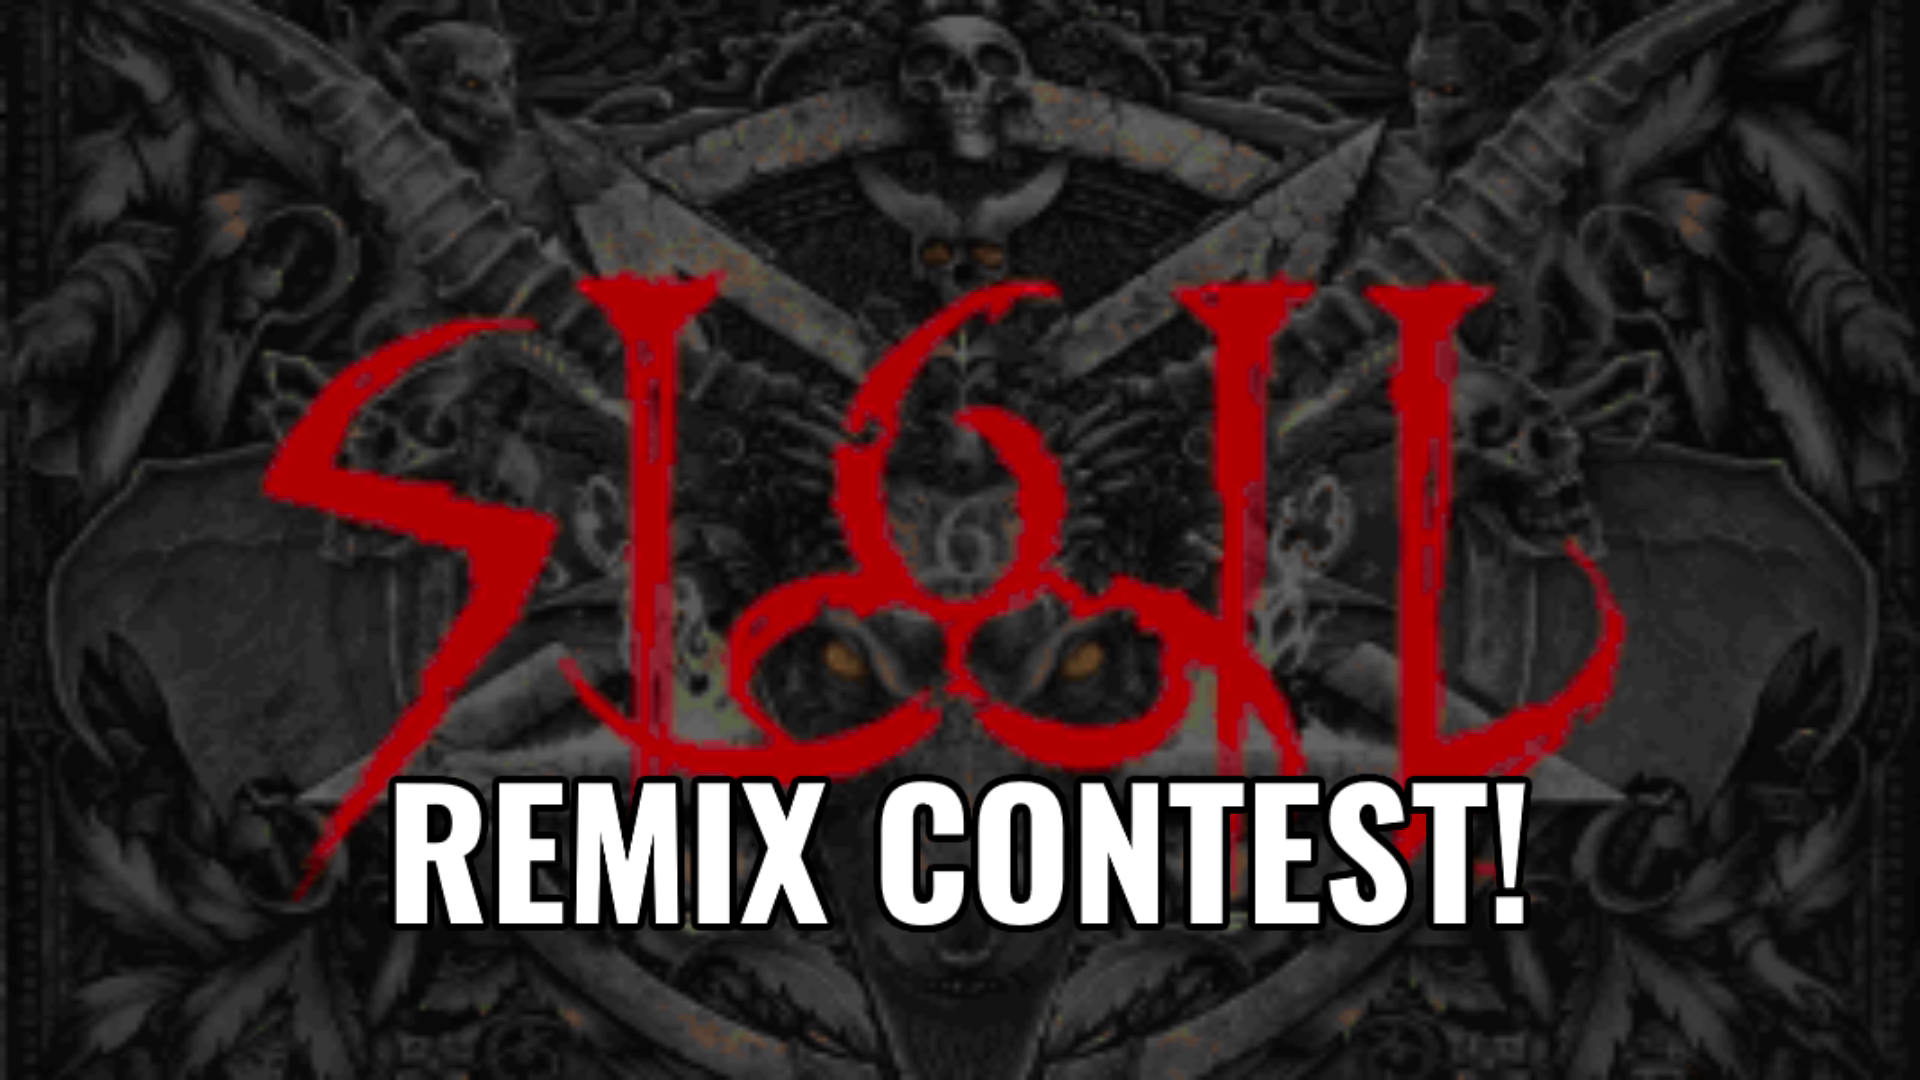 SIGIL Remix Contest results!